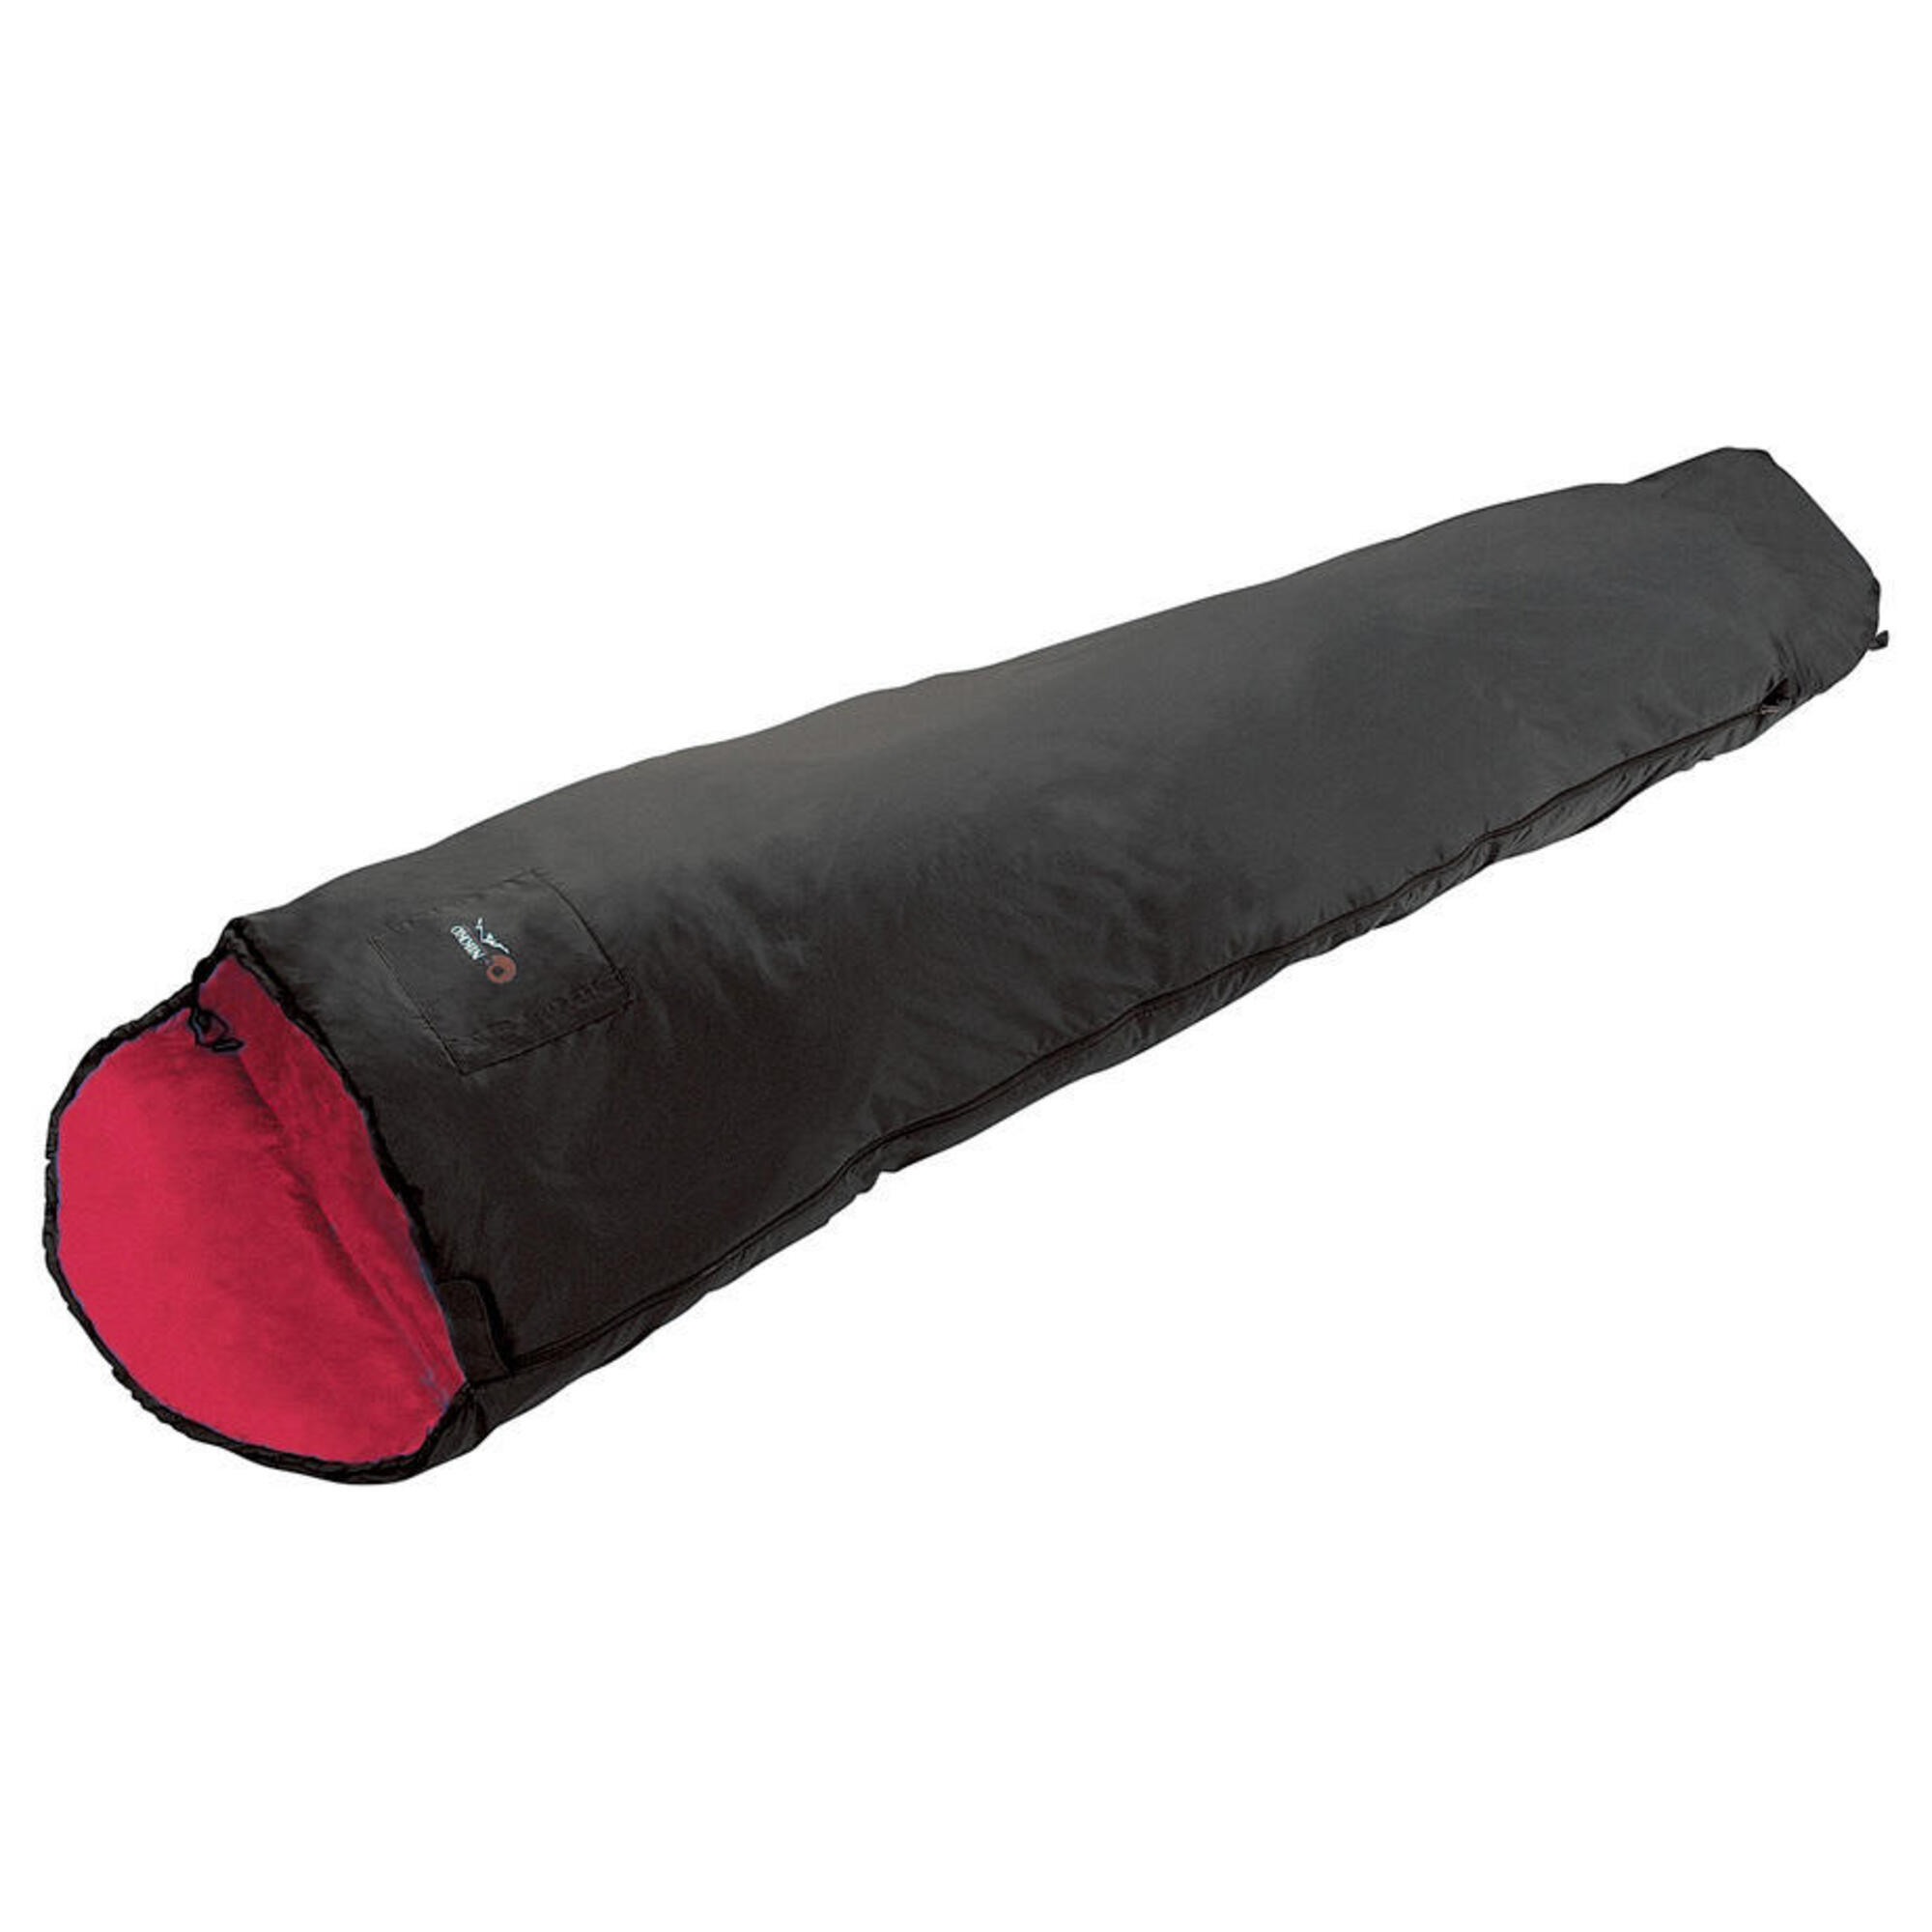 Hollow Fiber Sleeping Bag - 215 x 80cm - Decathlon